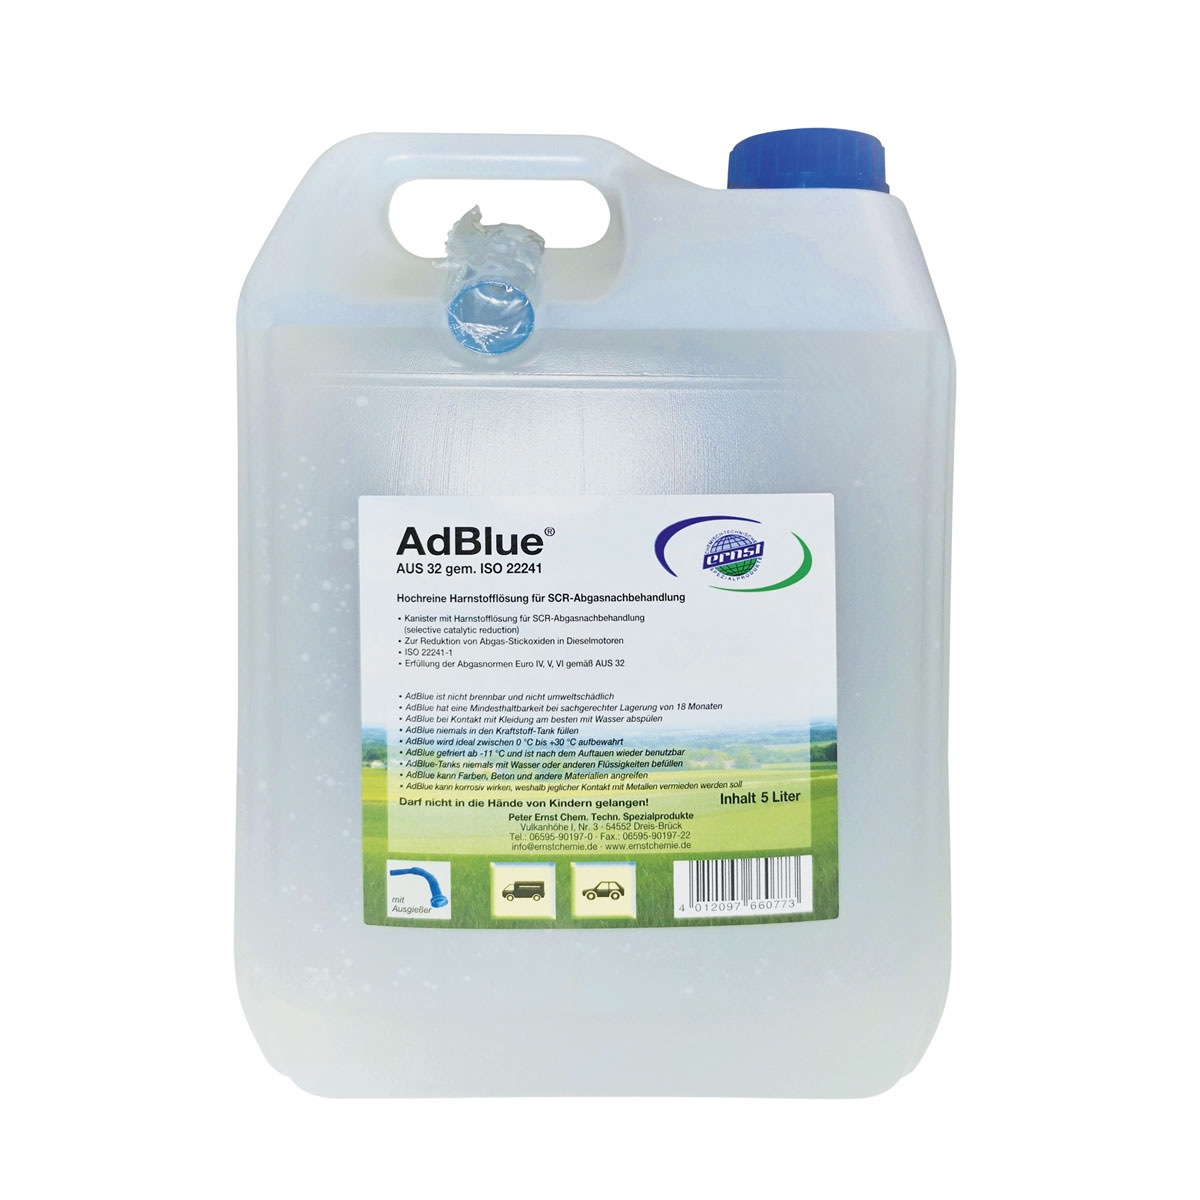 Ad Blue 10 Liter Kanister mit Außgieser Harnstofflösung gemäß ISO